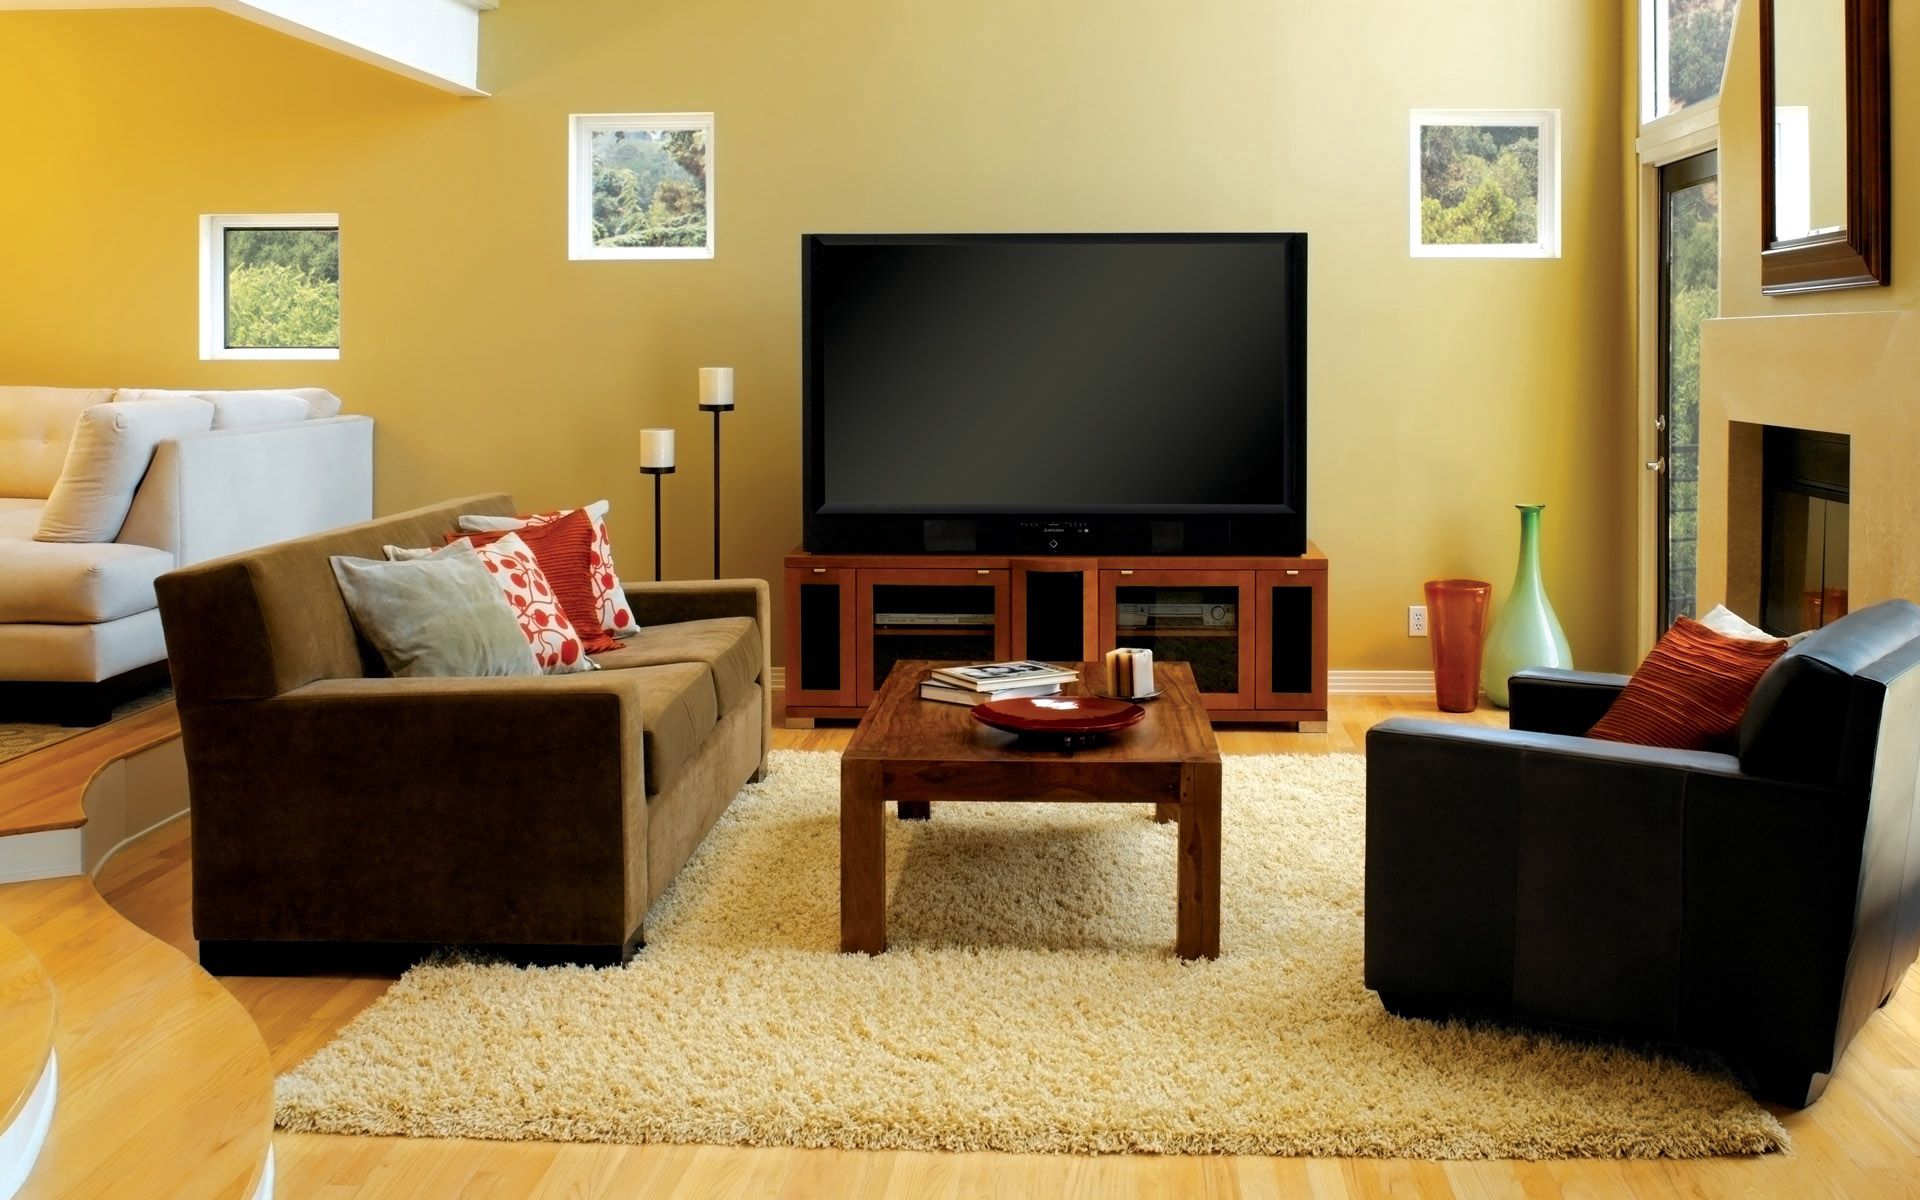 comfort, carpet, sofa, miscellanea, miscellaneous, style, furniture, coziness, living room